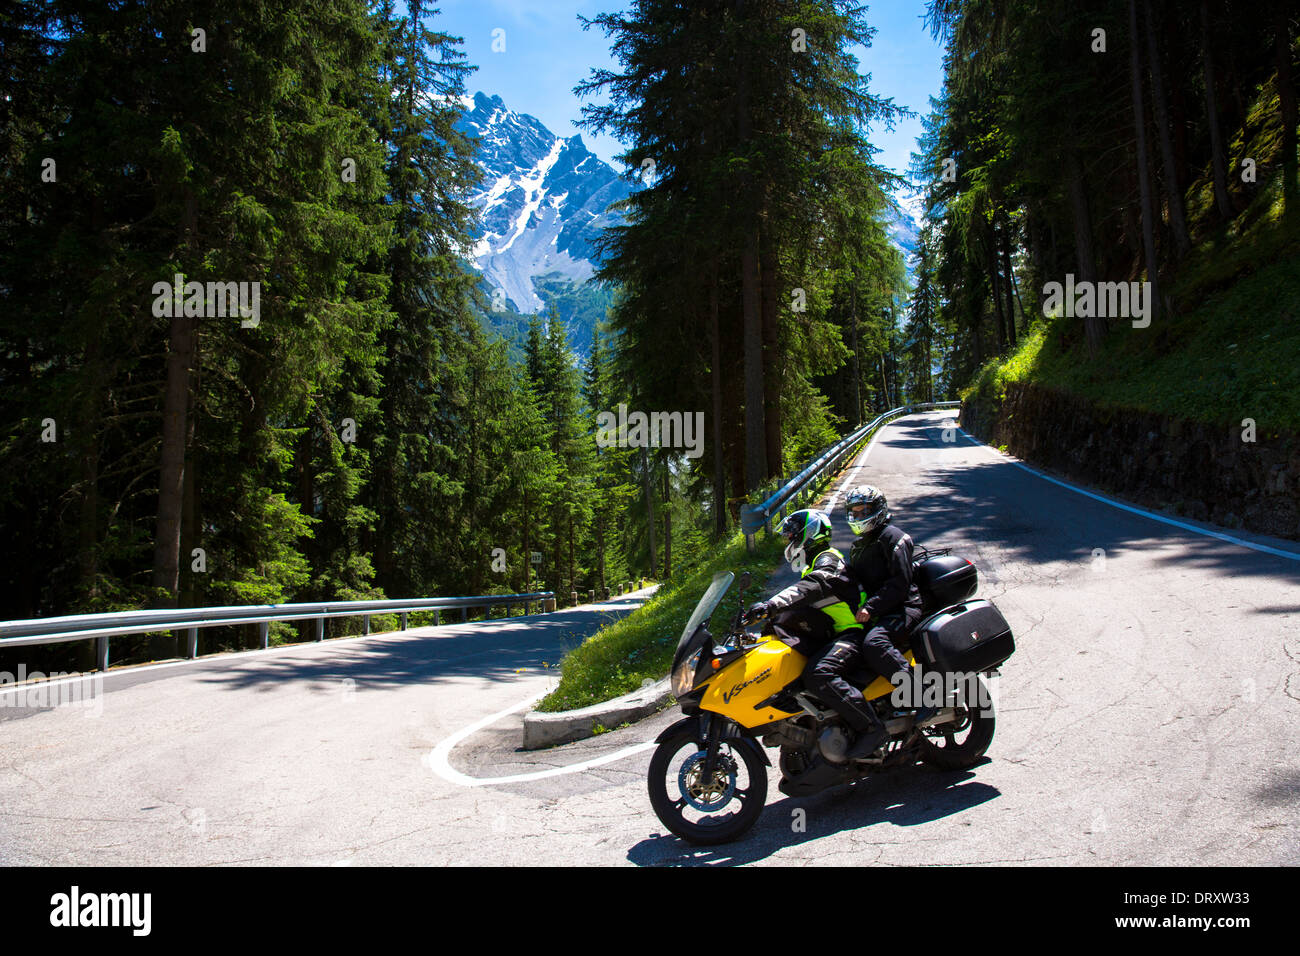 Suzuki Vstrom motorcycle on The Stelvio Pass, Passo dello Stelvio, Stilfser Joch, route to Trafio in The Alps, Italy Stock Photo